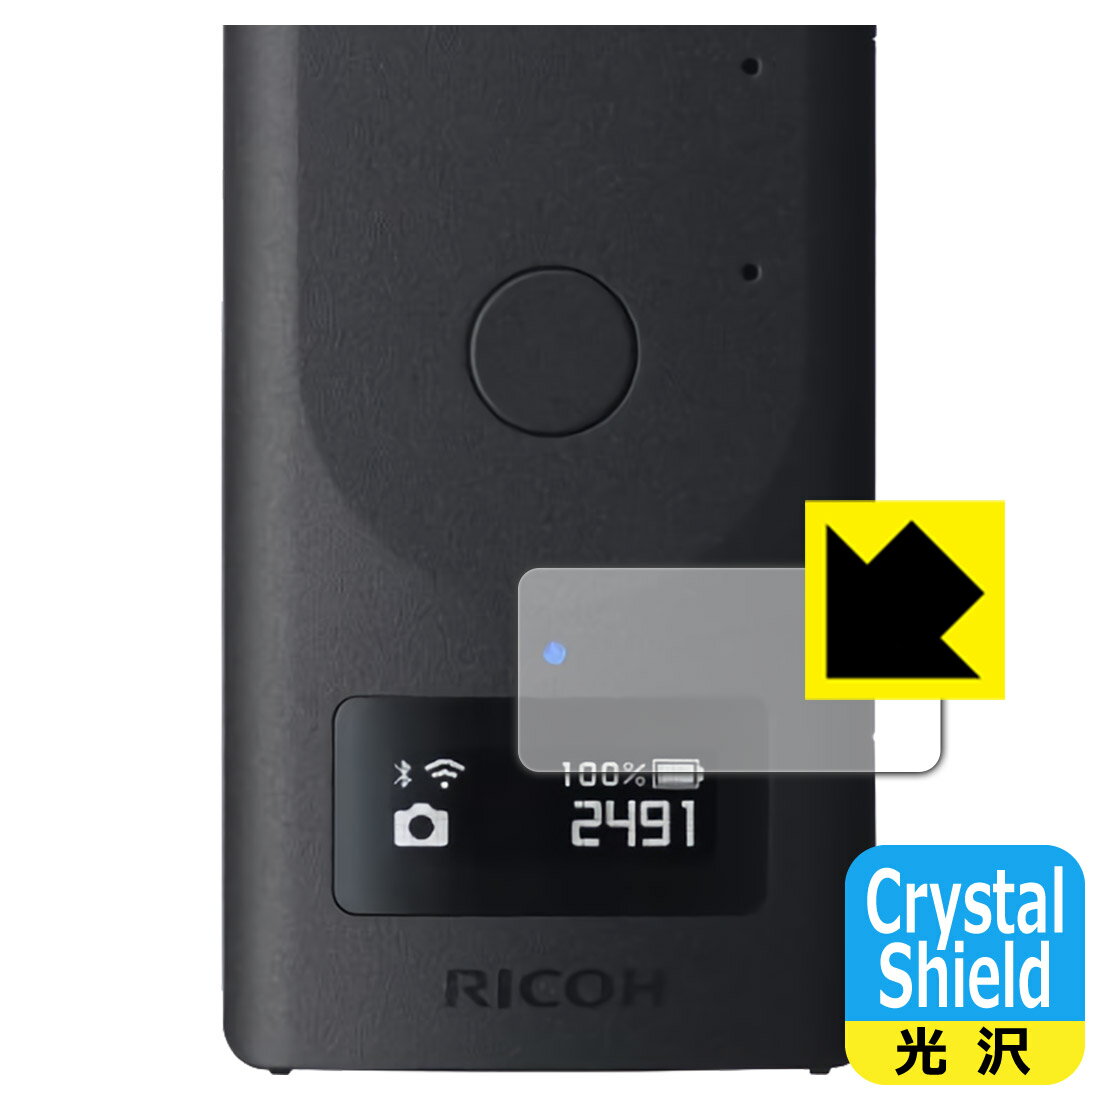 Crystal Shield RICOH THETA Z1 51GB / RICOH THETA Z1 (表示パネル部用) 日本製 自社製造直販